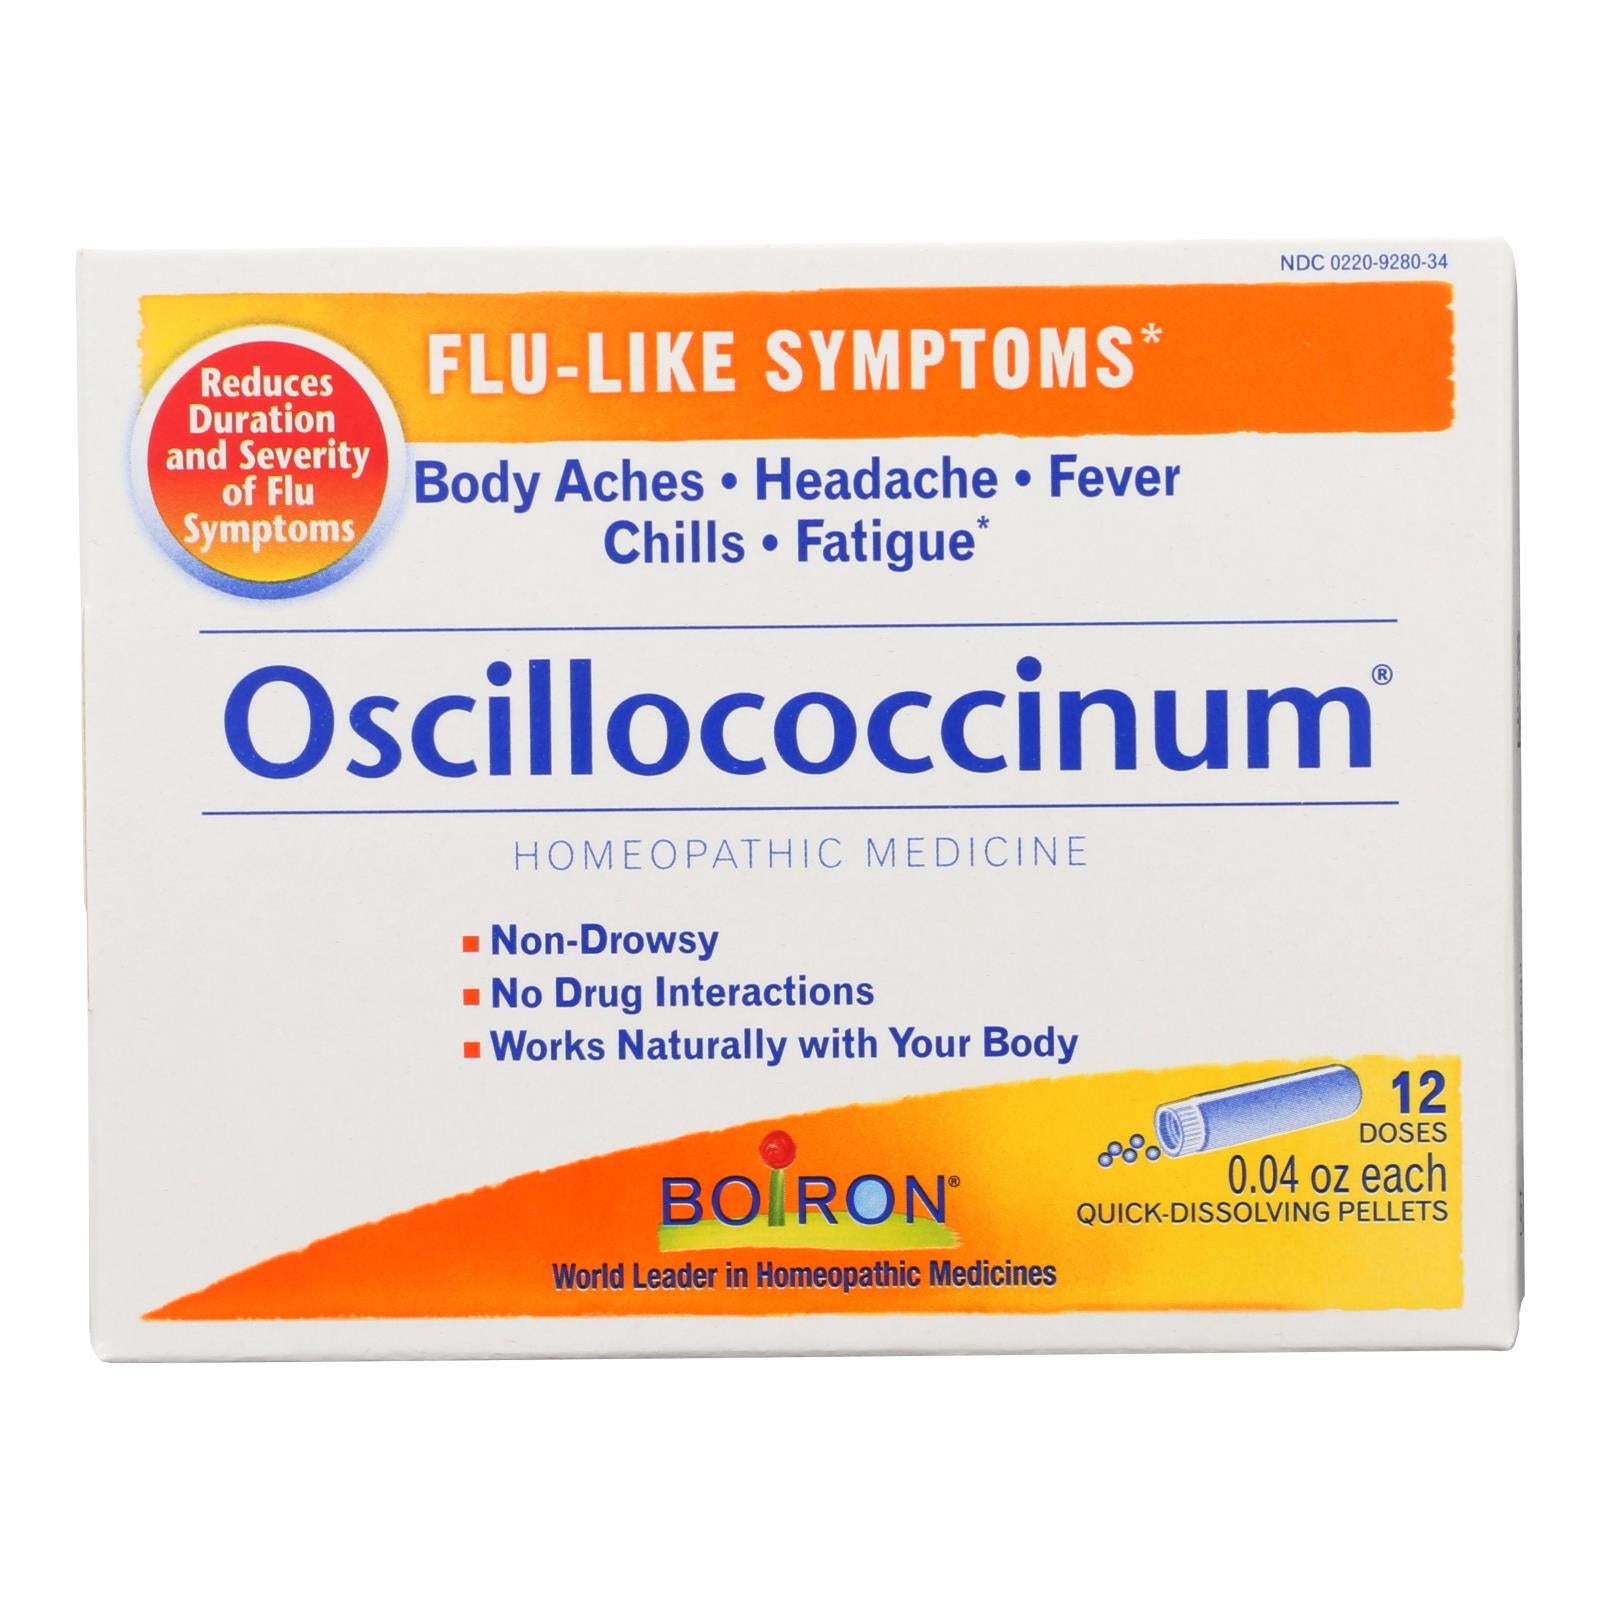 Boiron - Oscillococcinum - 12 Doses